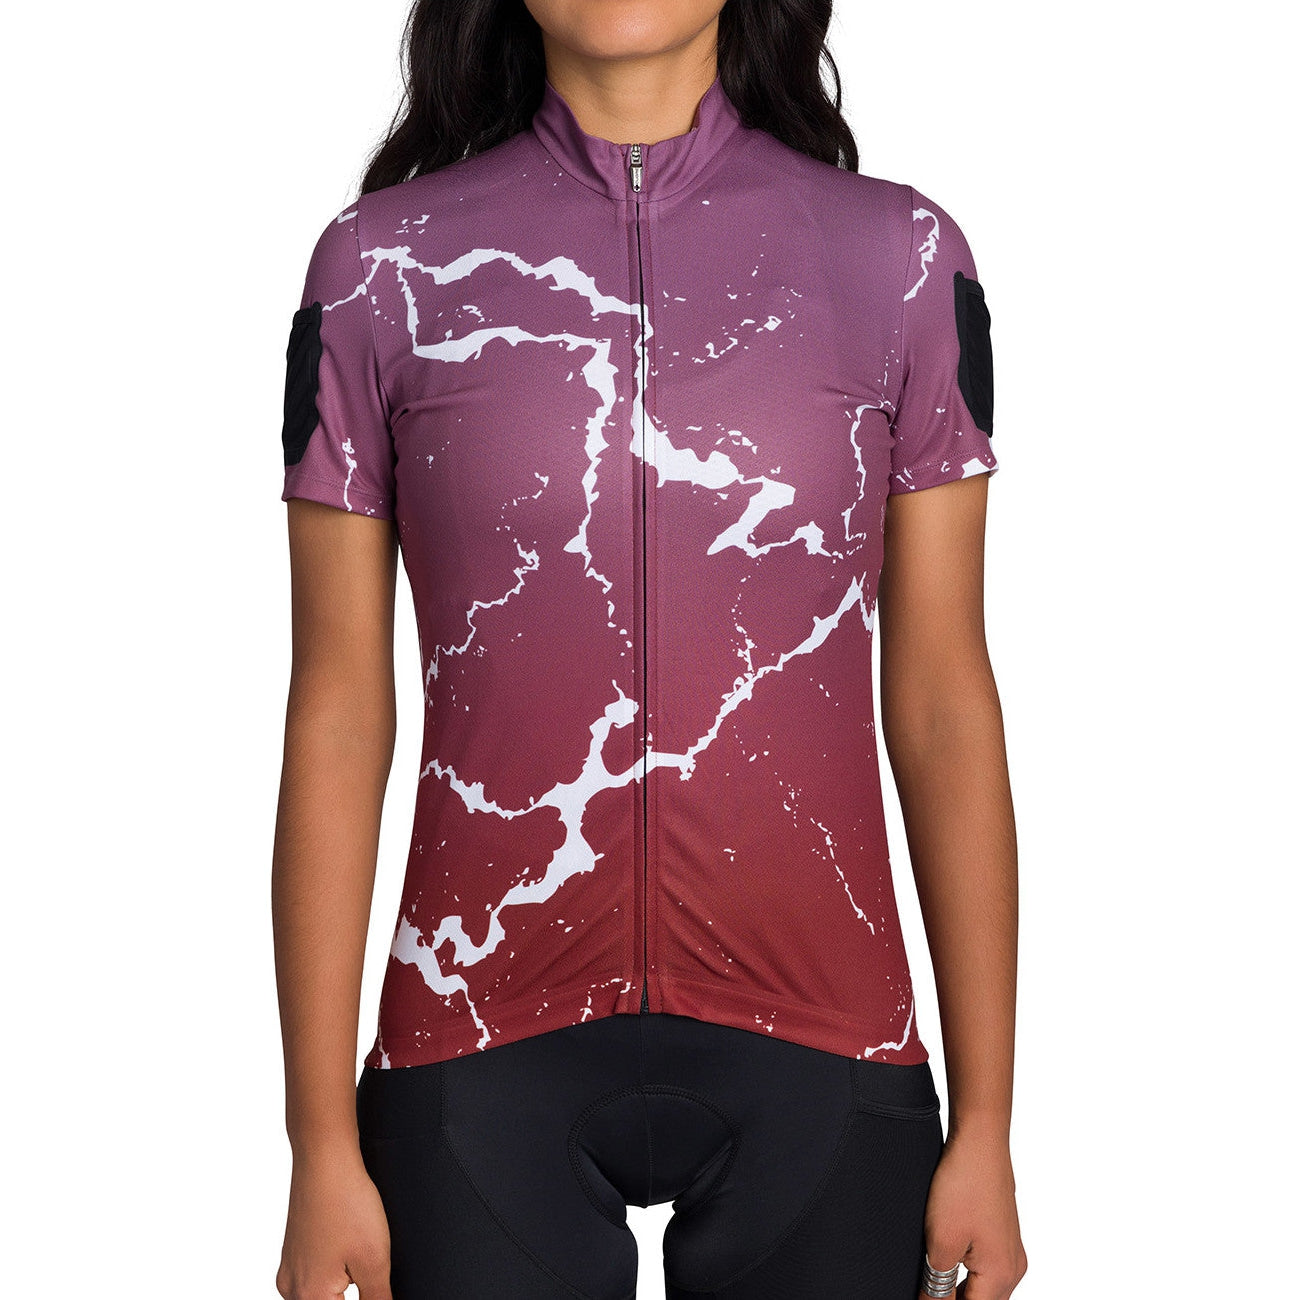 Liv Working Title Women's Road Bike Jersey - Purple - Jerseys - Bicycle Warehouse